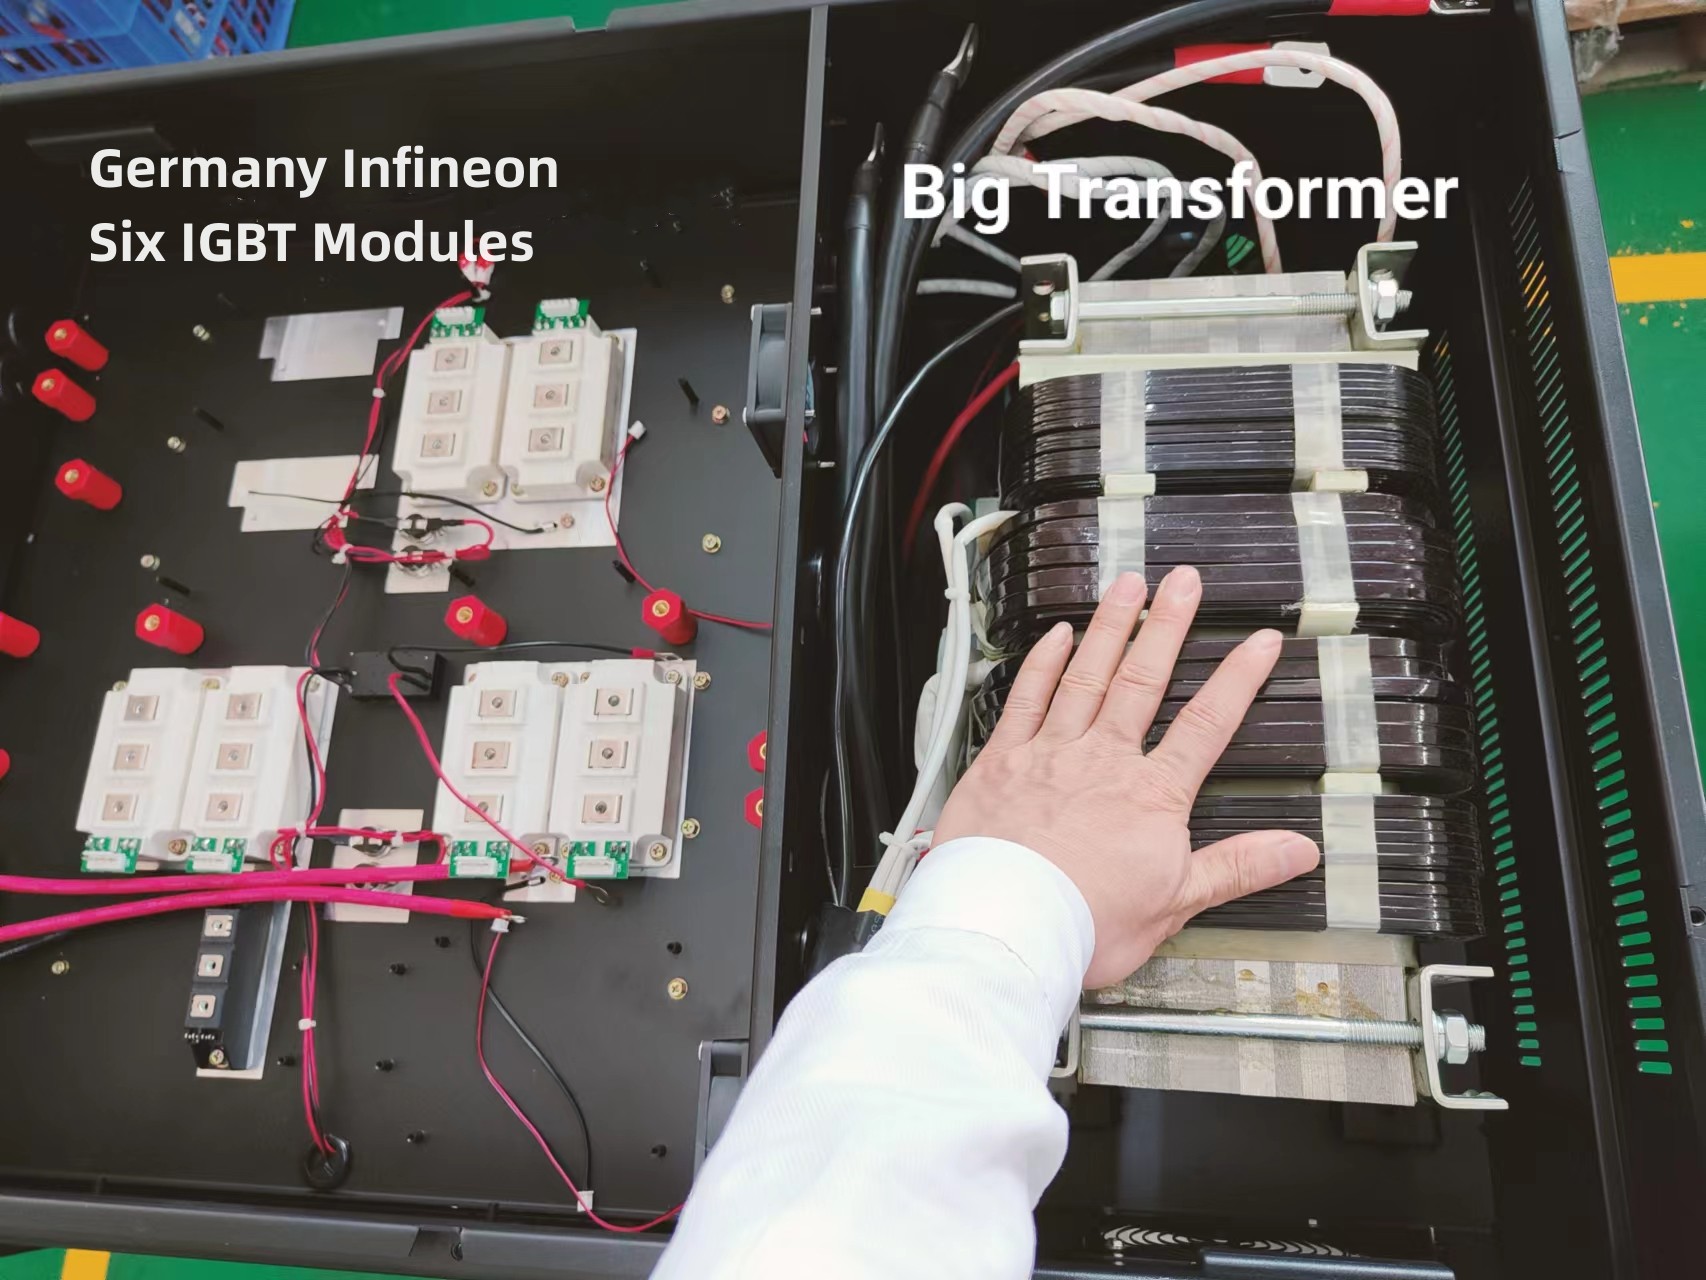 Germany infineon IGBT module solar inverter.jpg